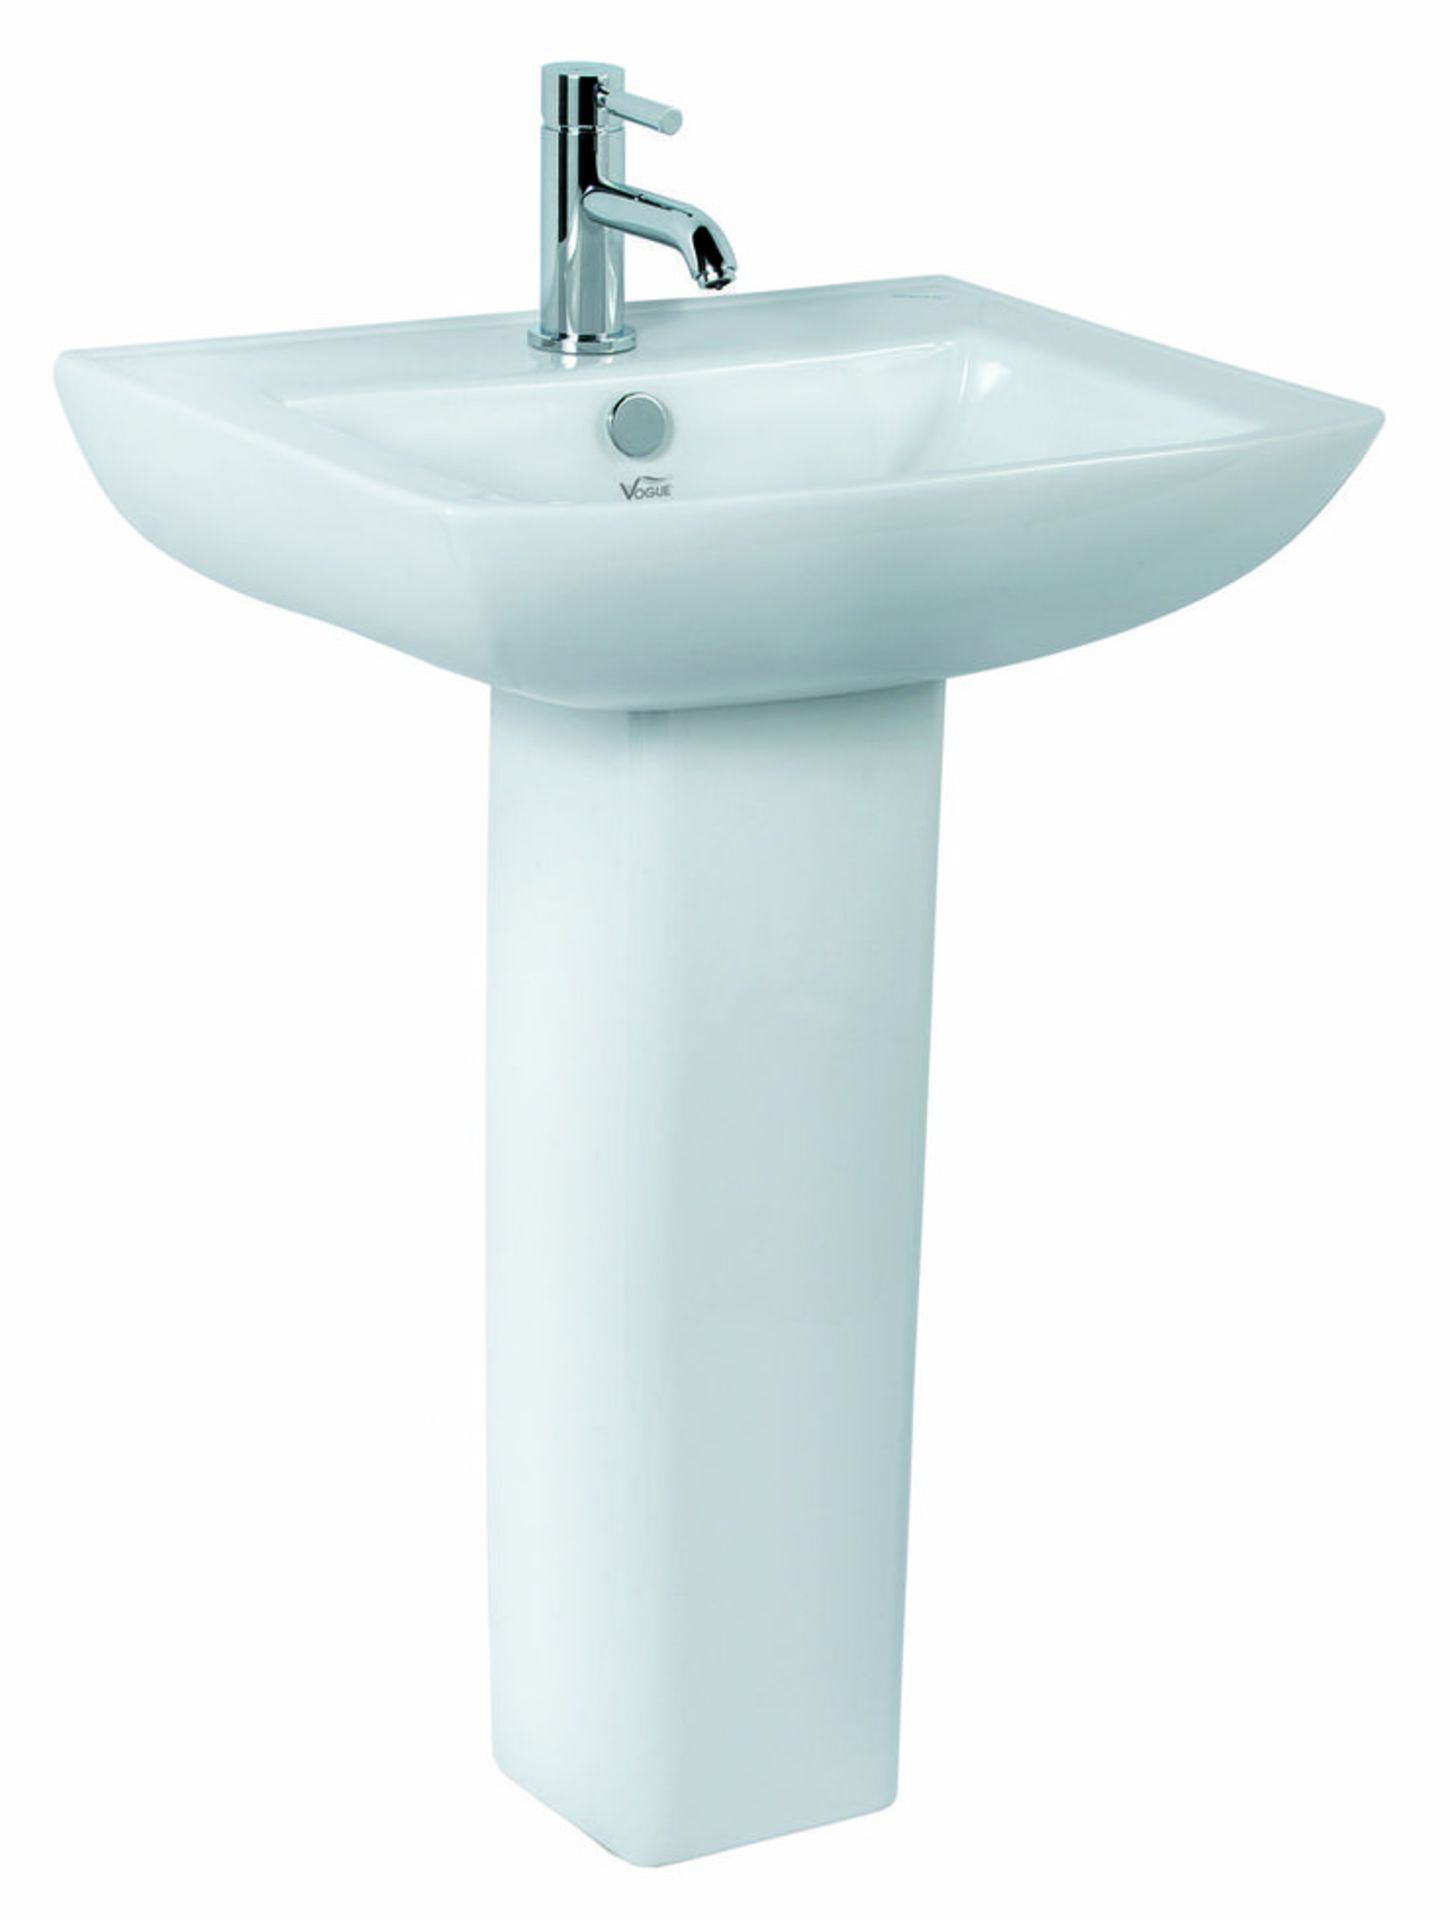 4 x Vogue Bathrooms CASOLI Single Tap Hole SINK BASINS With Pedestals - 600mm Width - Brand New